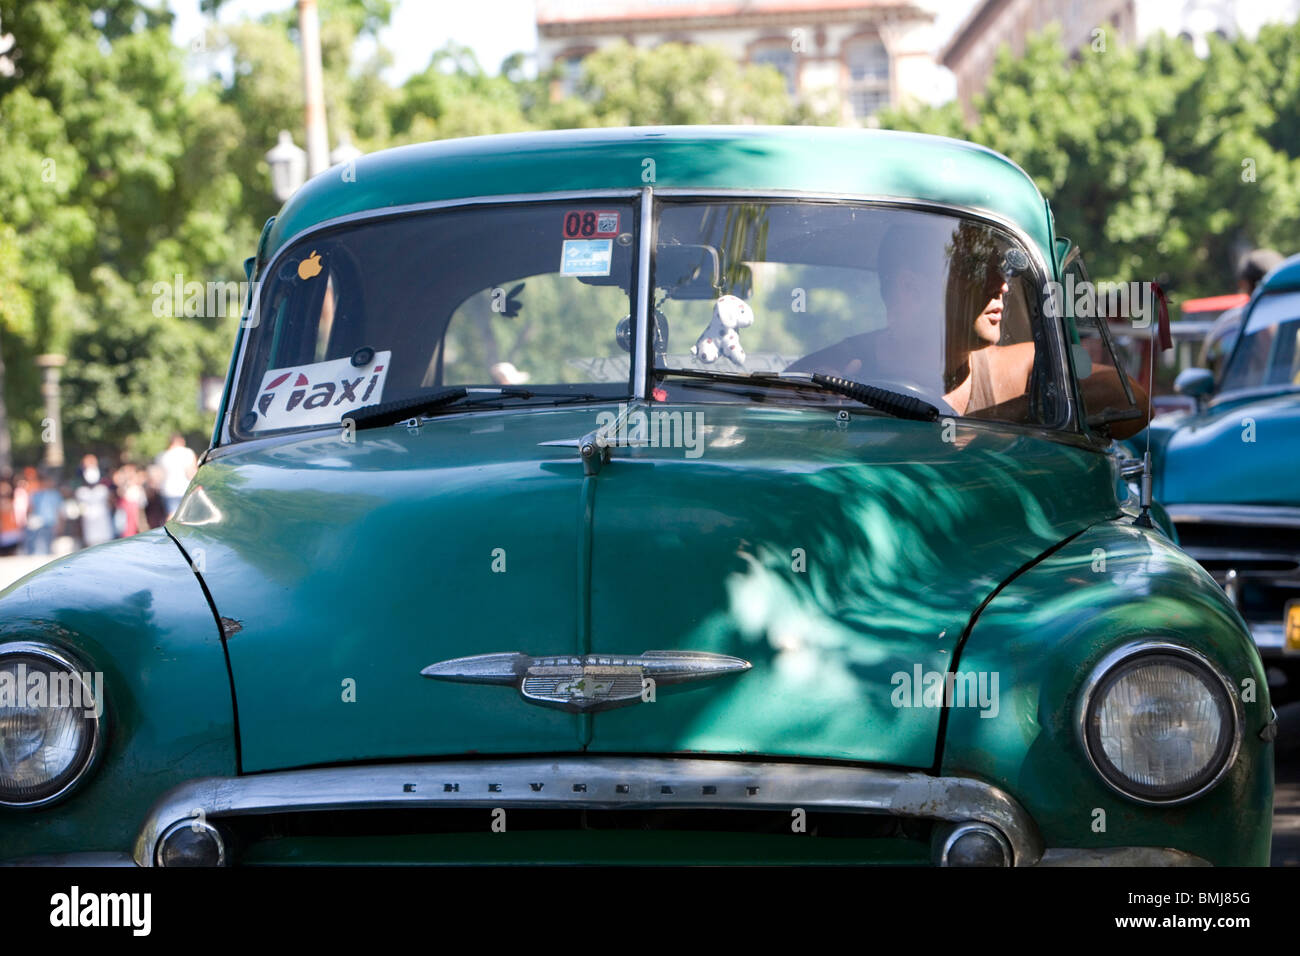 Classic American cars drive the streets of Havana, Cuba. Stock Photo